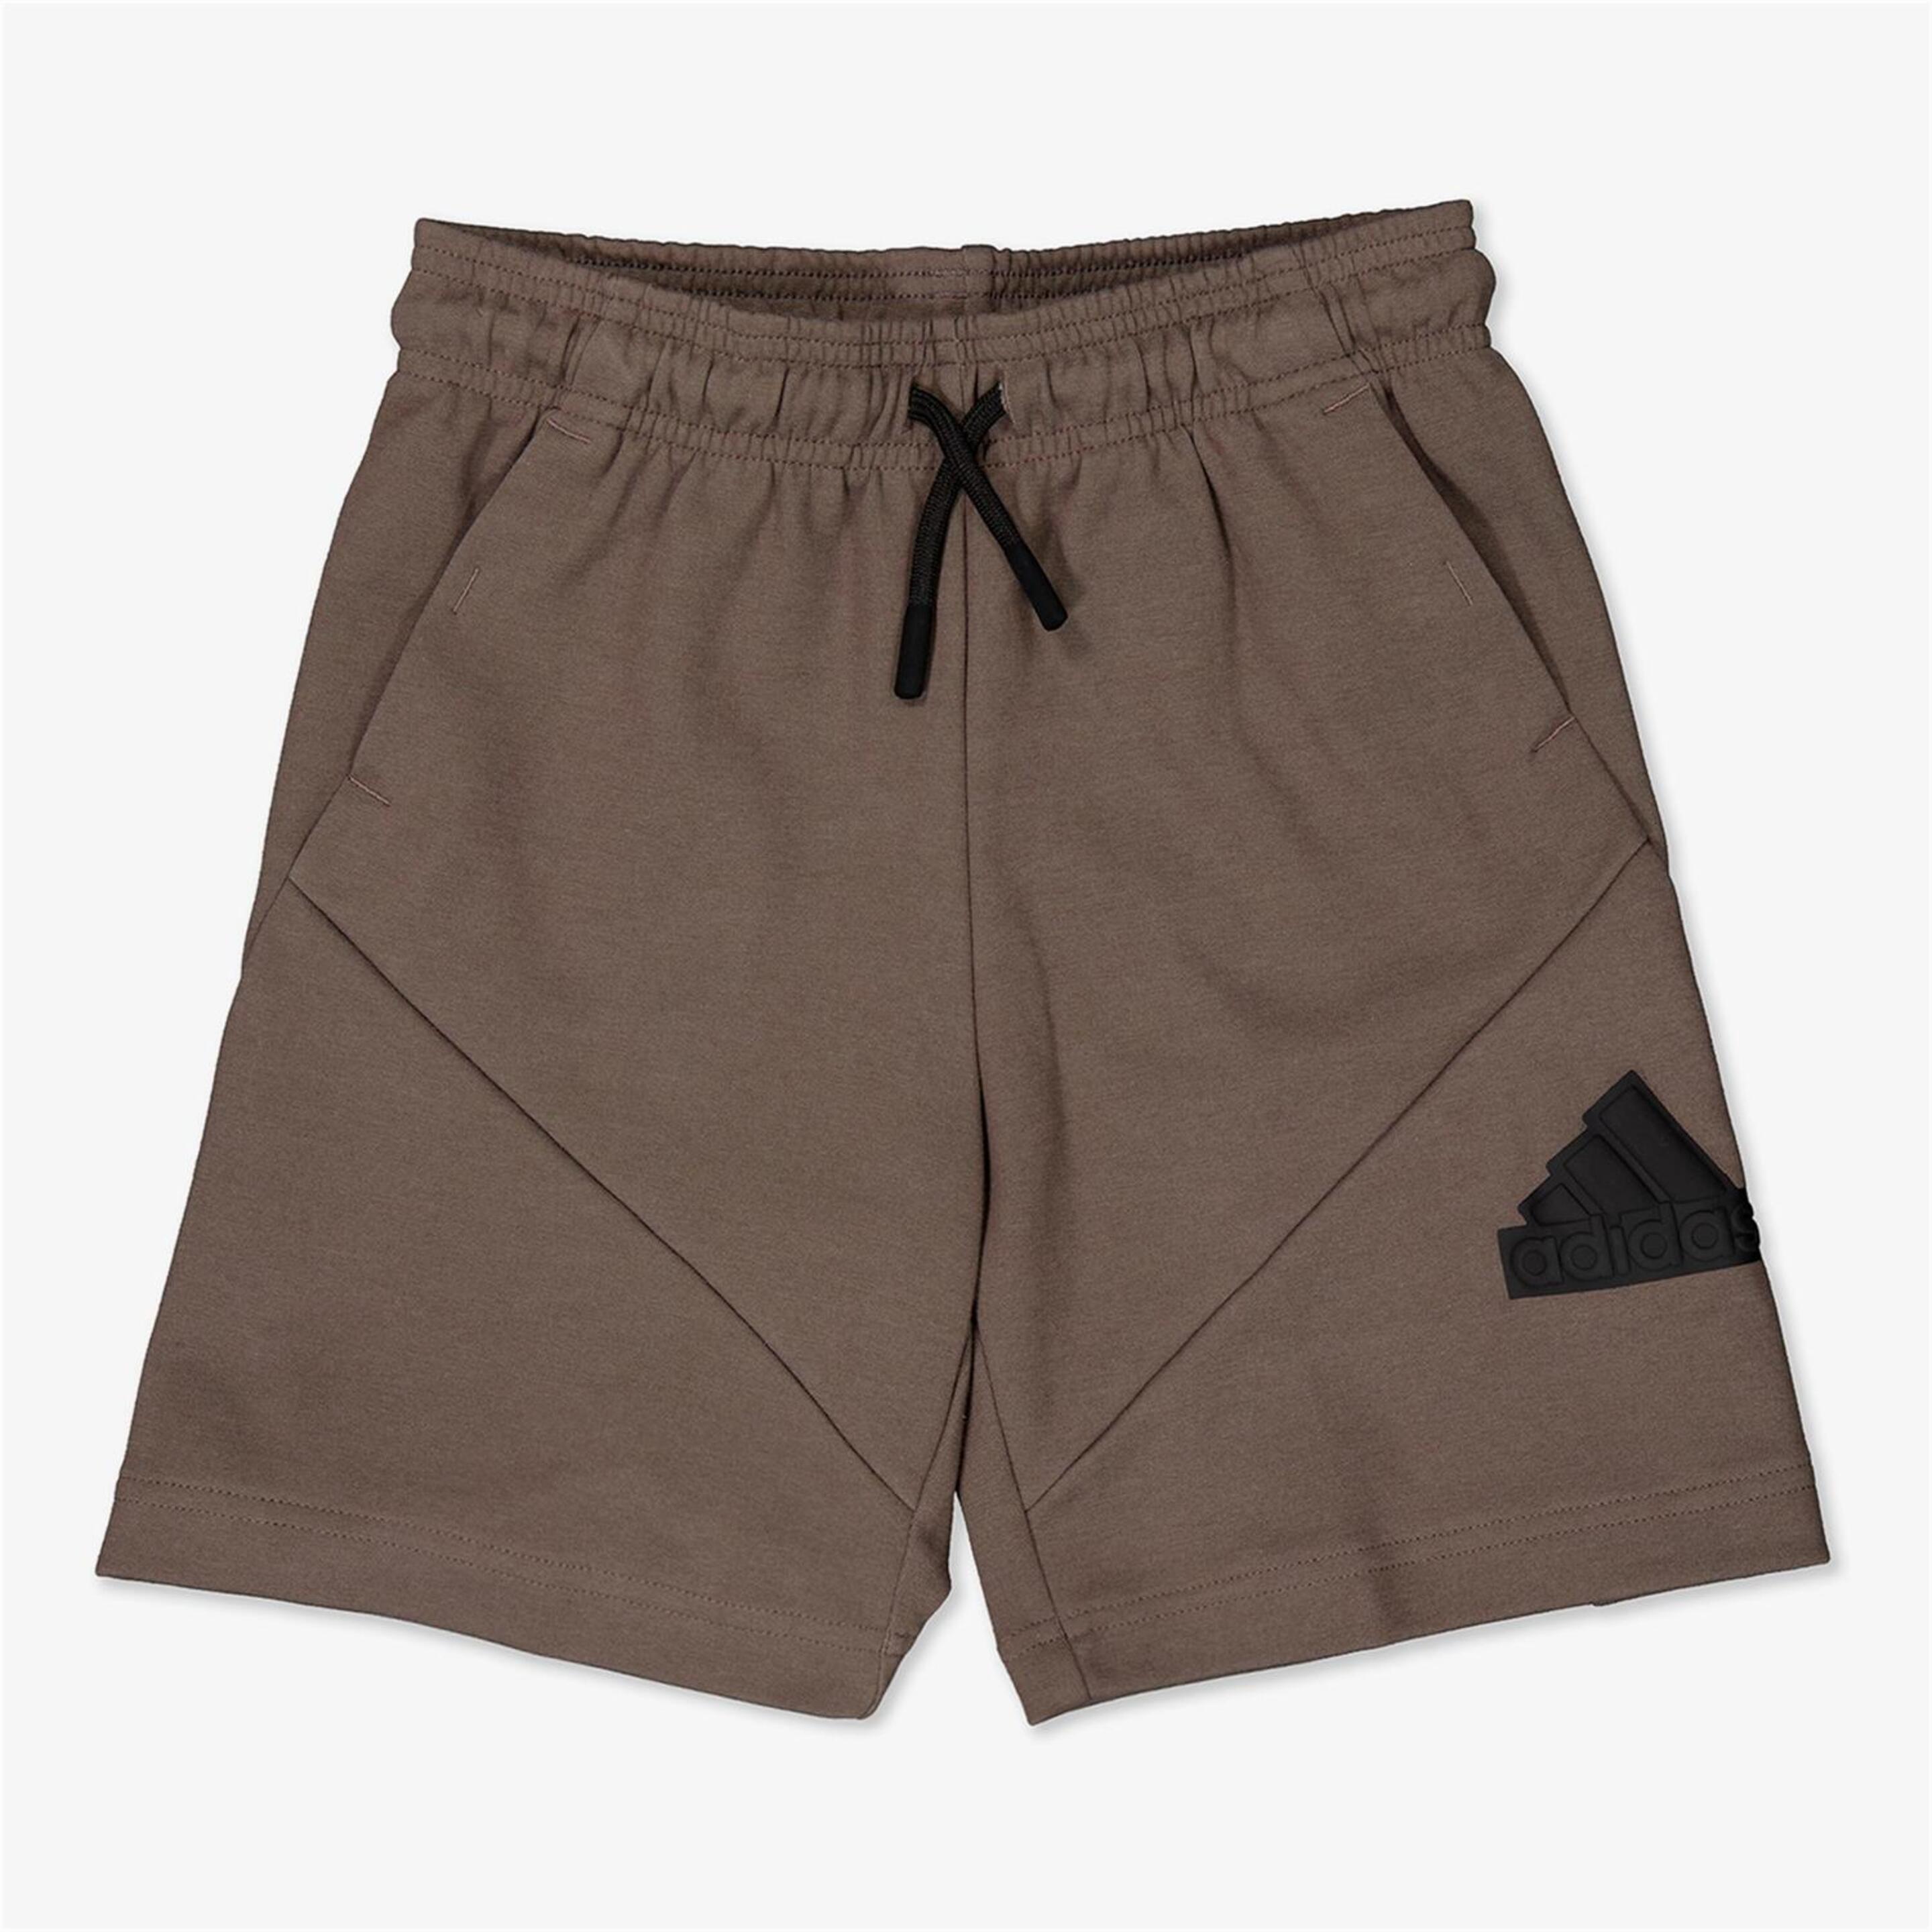 Pantalón Corto adidas - marron - Bermuda Niño